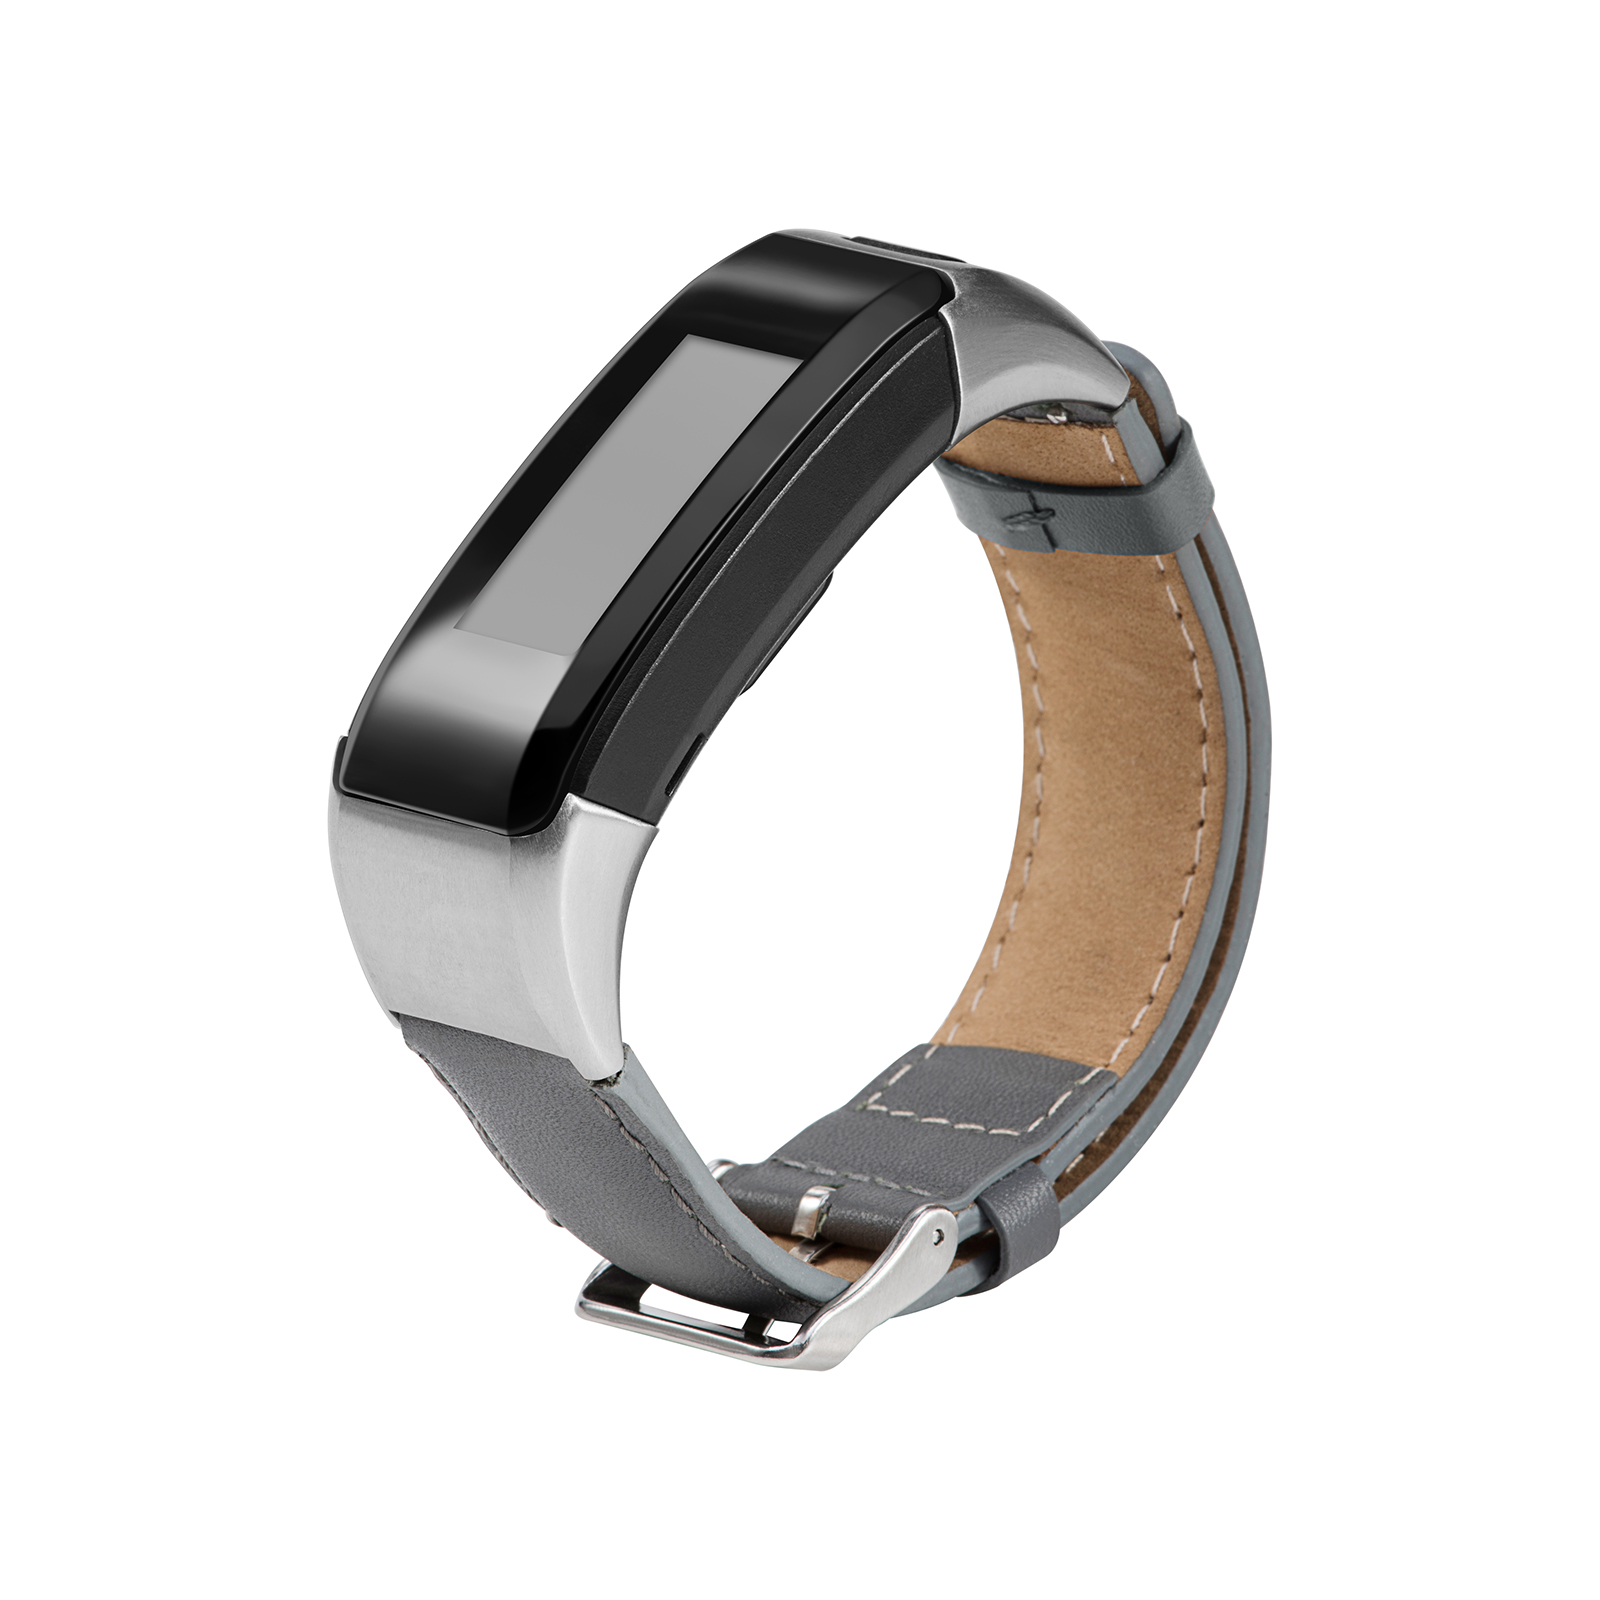 Bakeey-Retro-Metal-Buckle-Leather-Strap-Smart-Watch-Band-For-Garmin-Vivosmart-HR-1739351-13